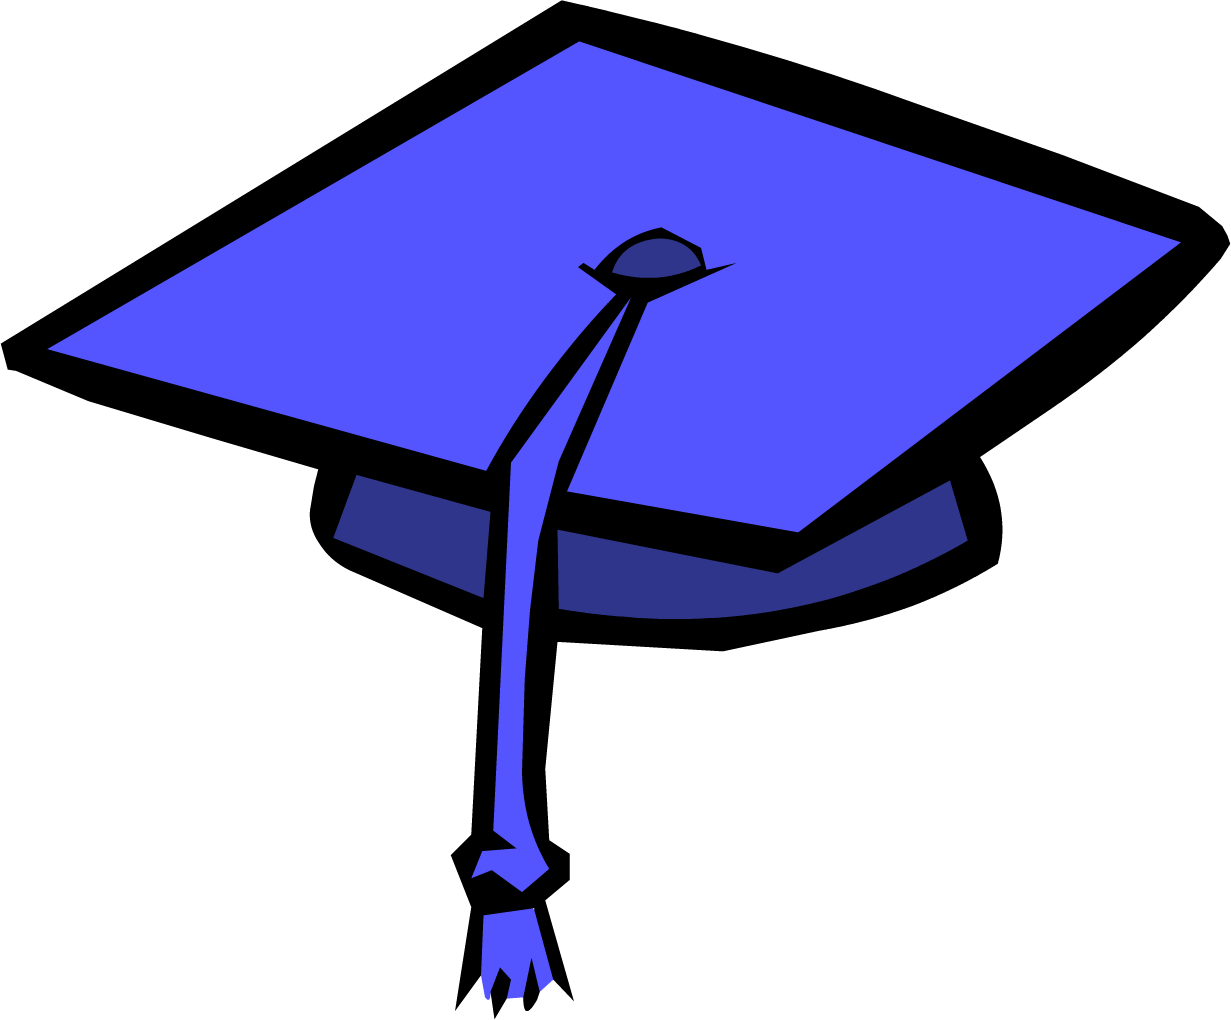 Graduation Cap - Club Penguin Wiki - The free, editable ...